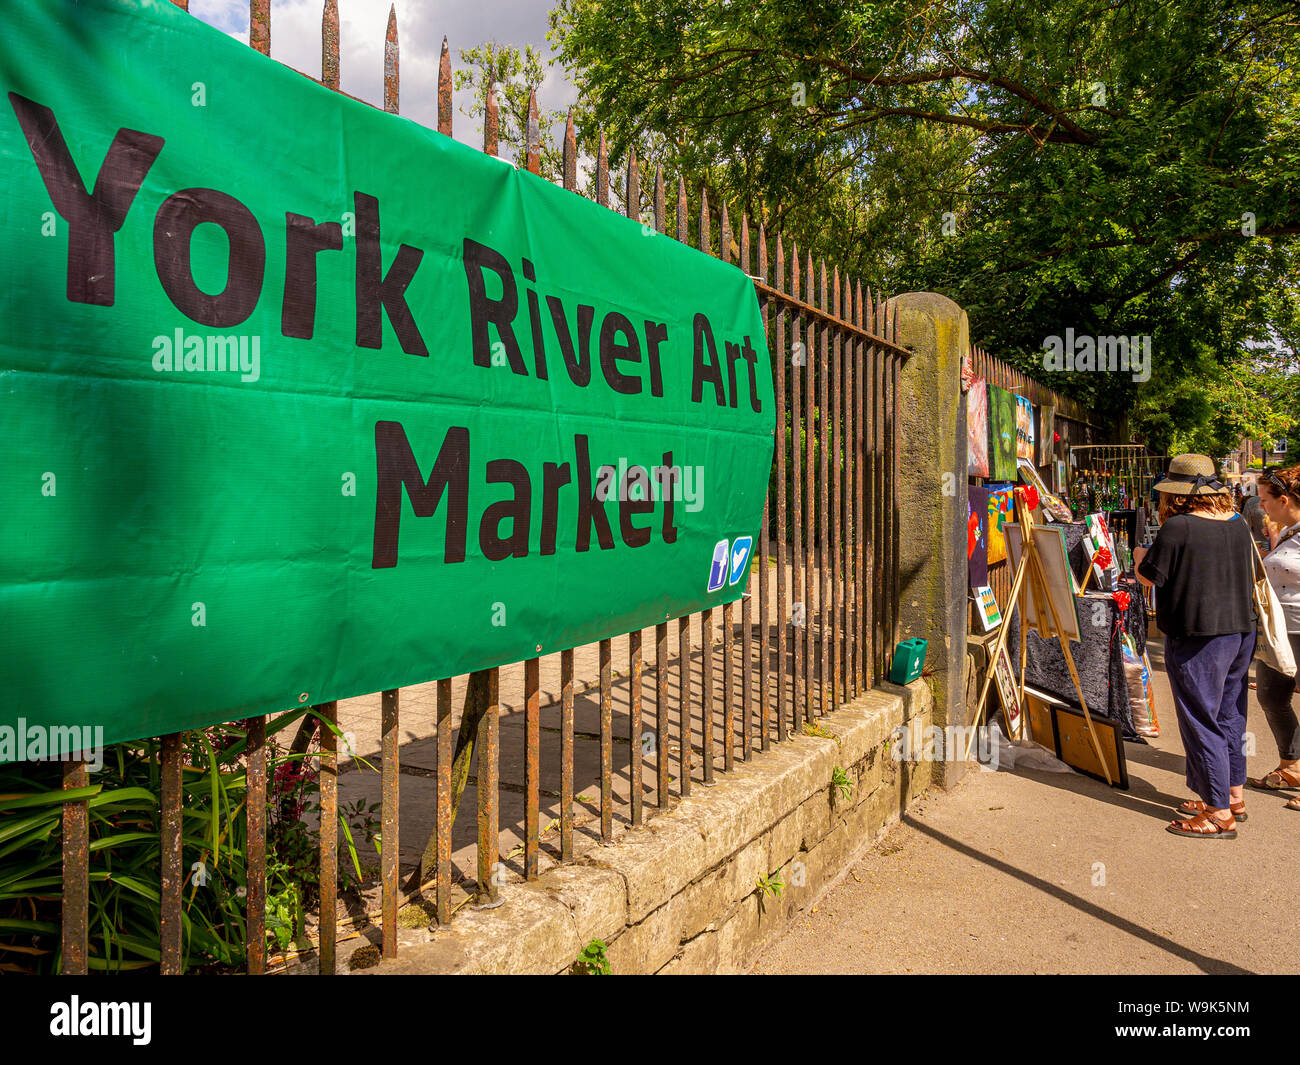 York river Art Market, York riverside, UK. Stock Photo